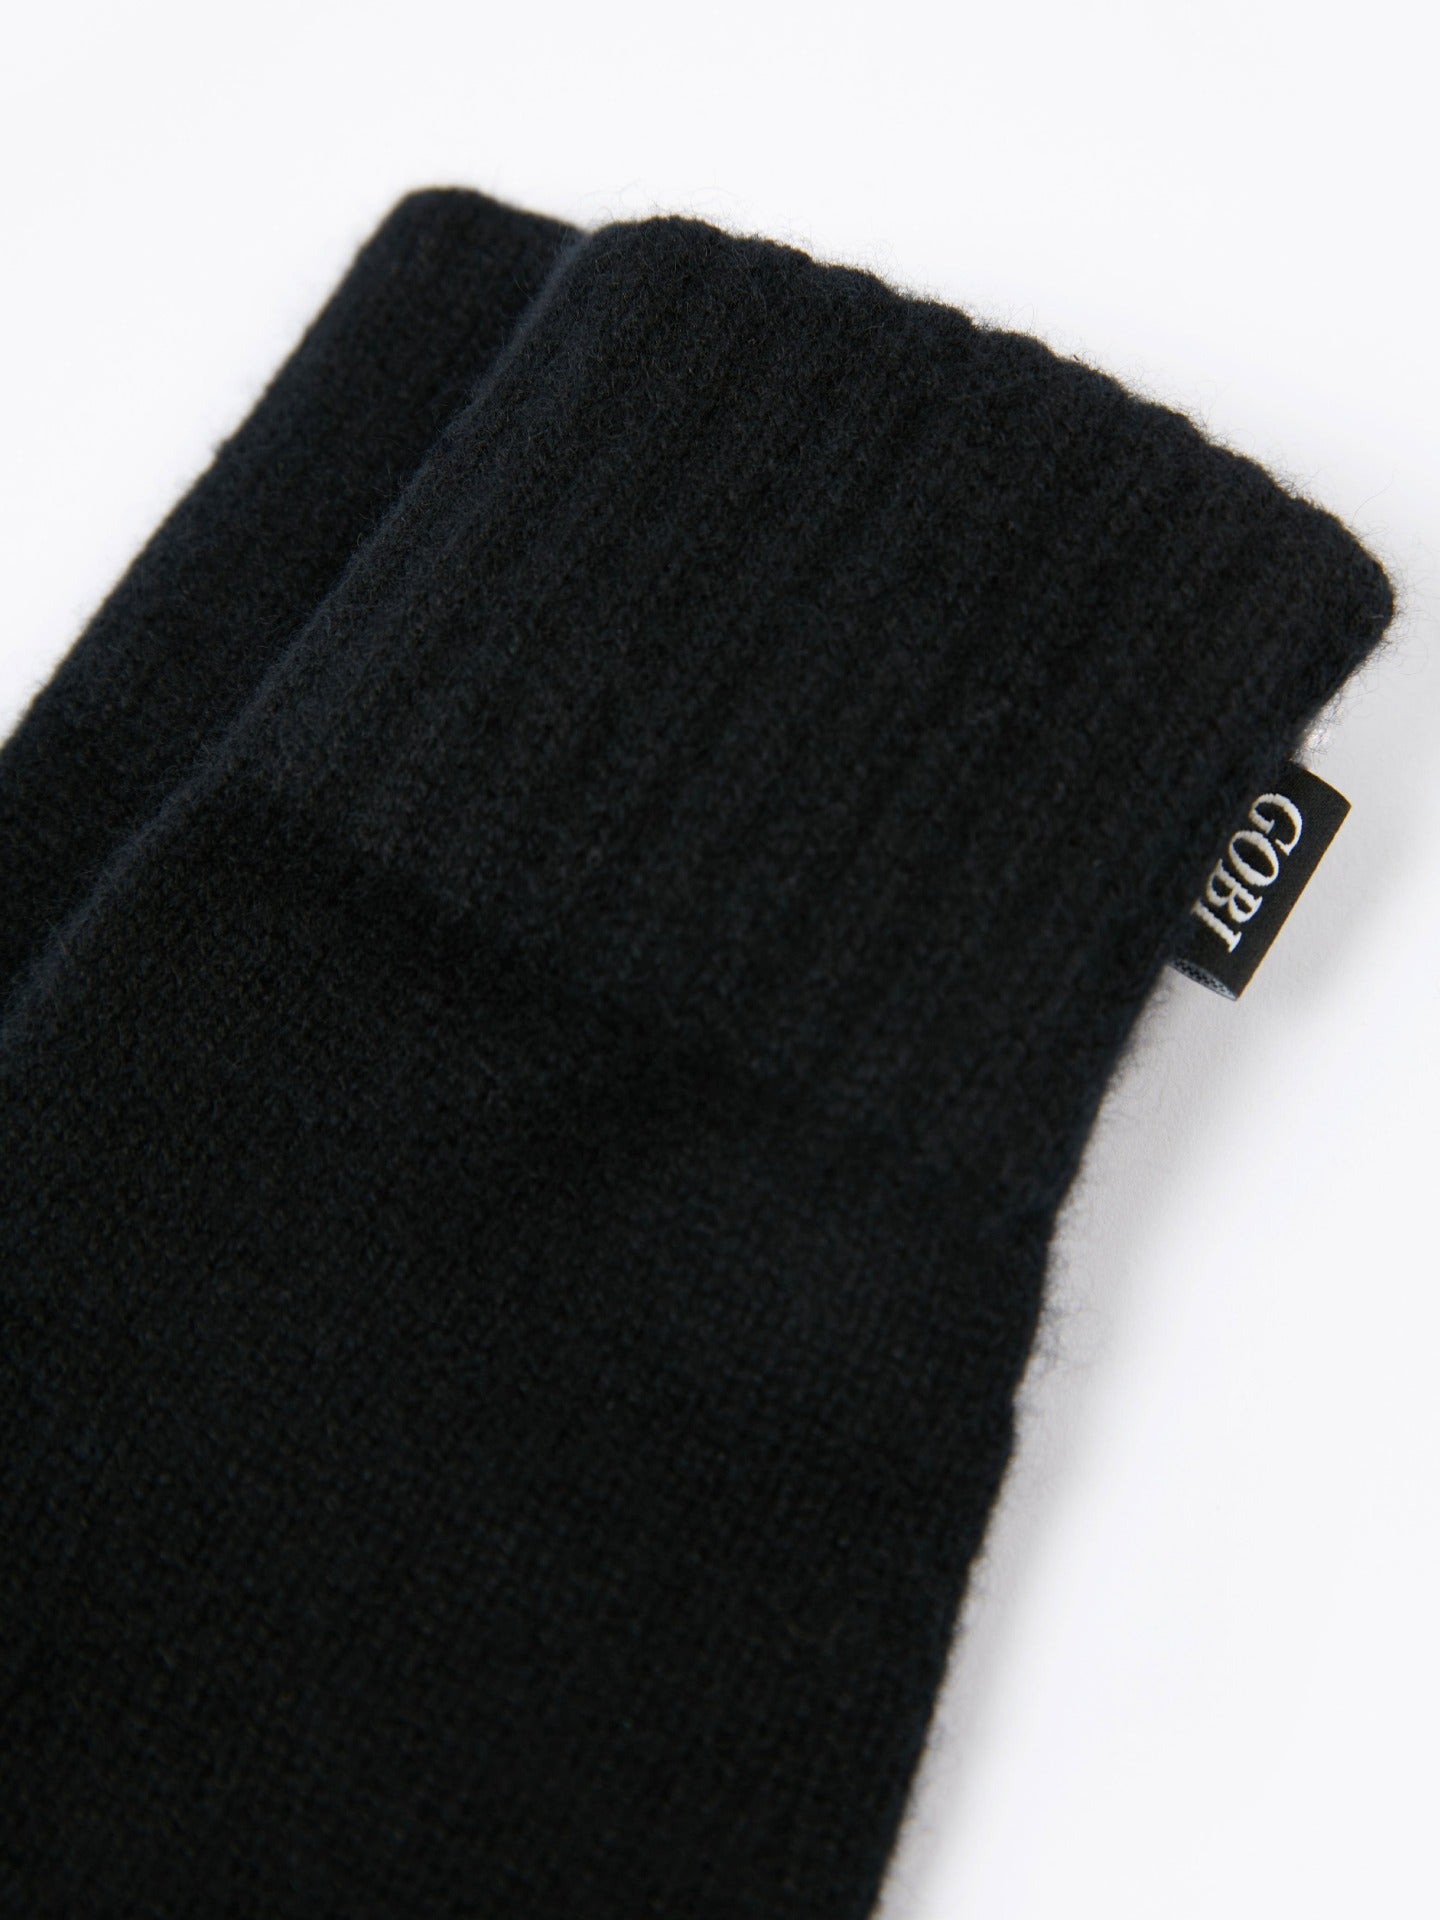 Women's Cashmere Gloves Black - Gobi Cashmere